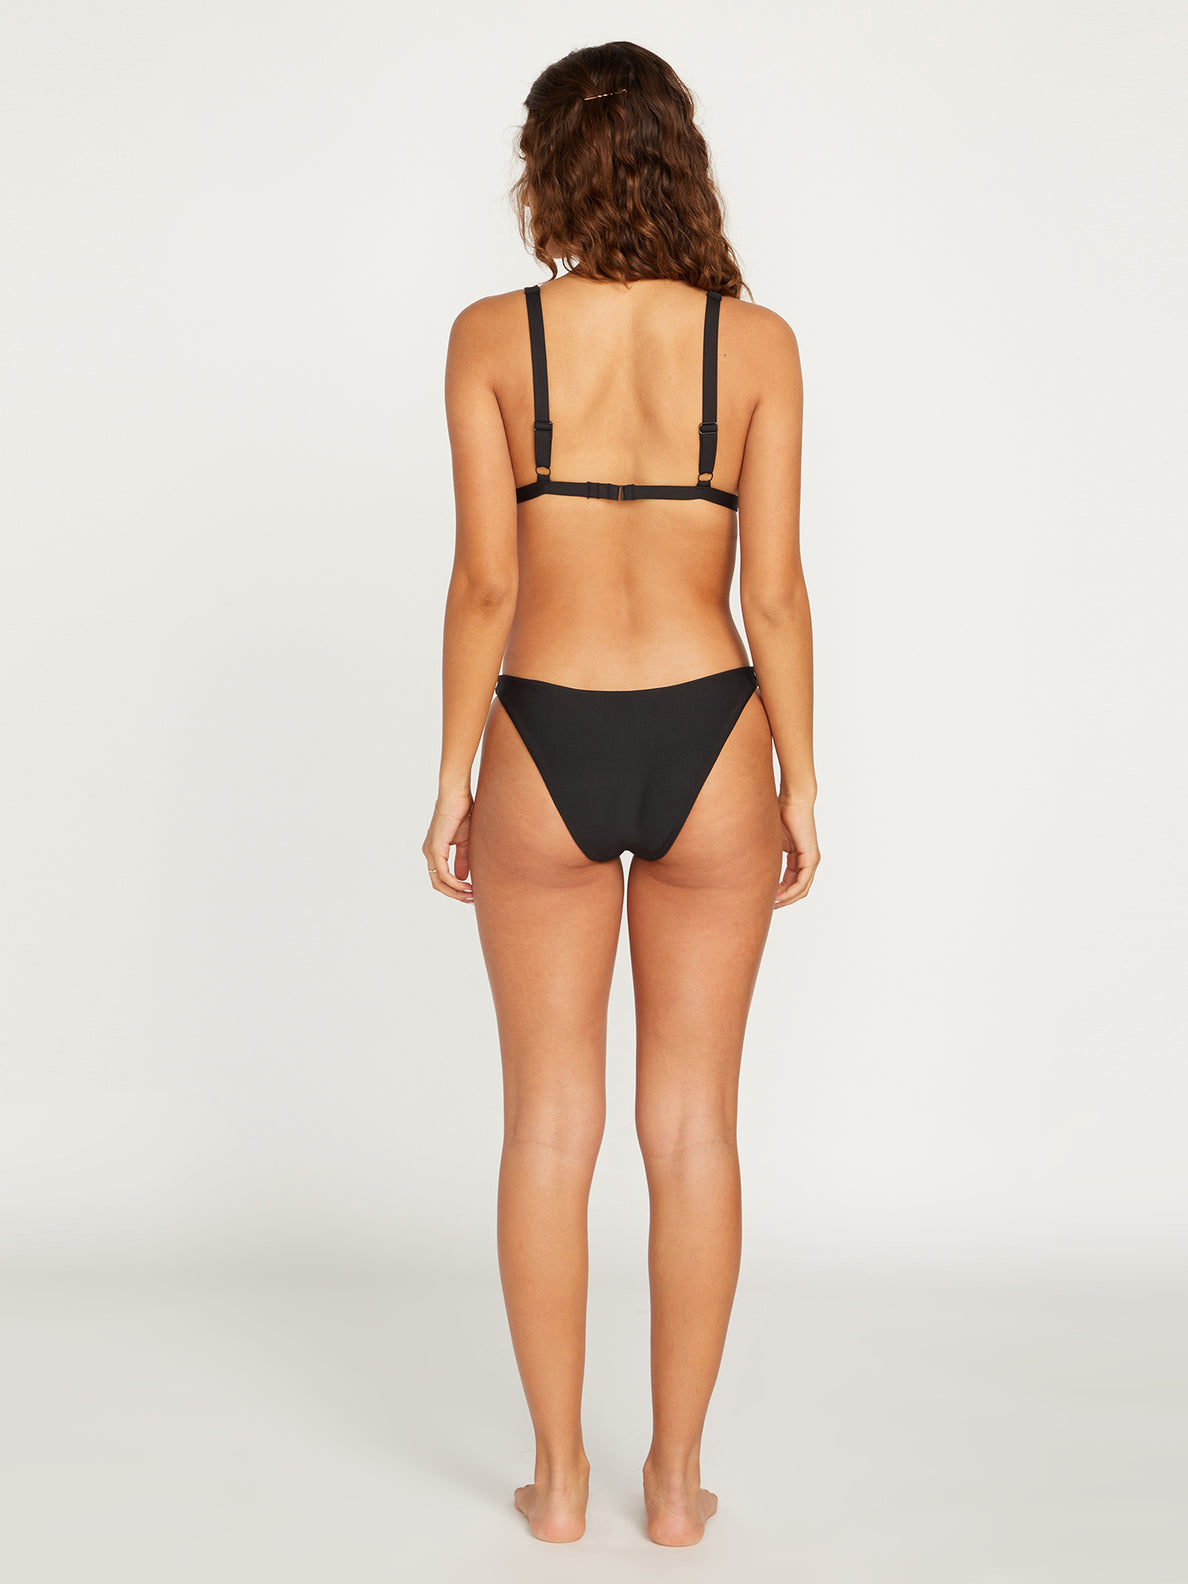 Simply Seamless Skimpy Bikini Top - Black (O2312307_BLK) [1]